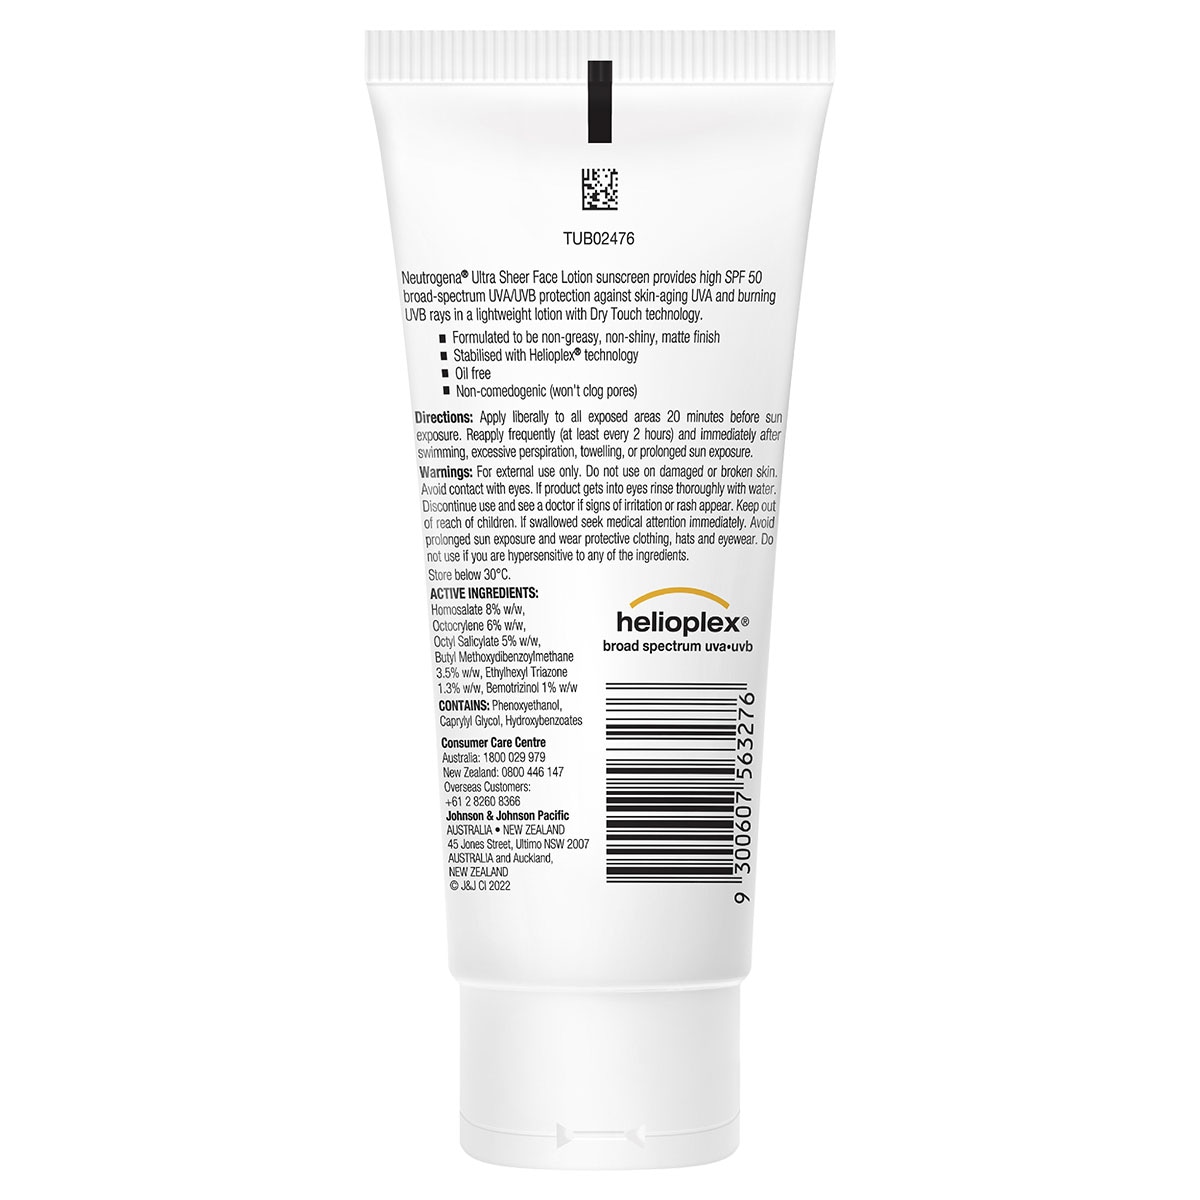 Neutrogena Ultra Sheer Face Lotion Sunscreen SPF50 88ml